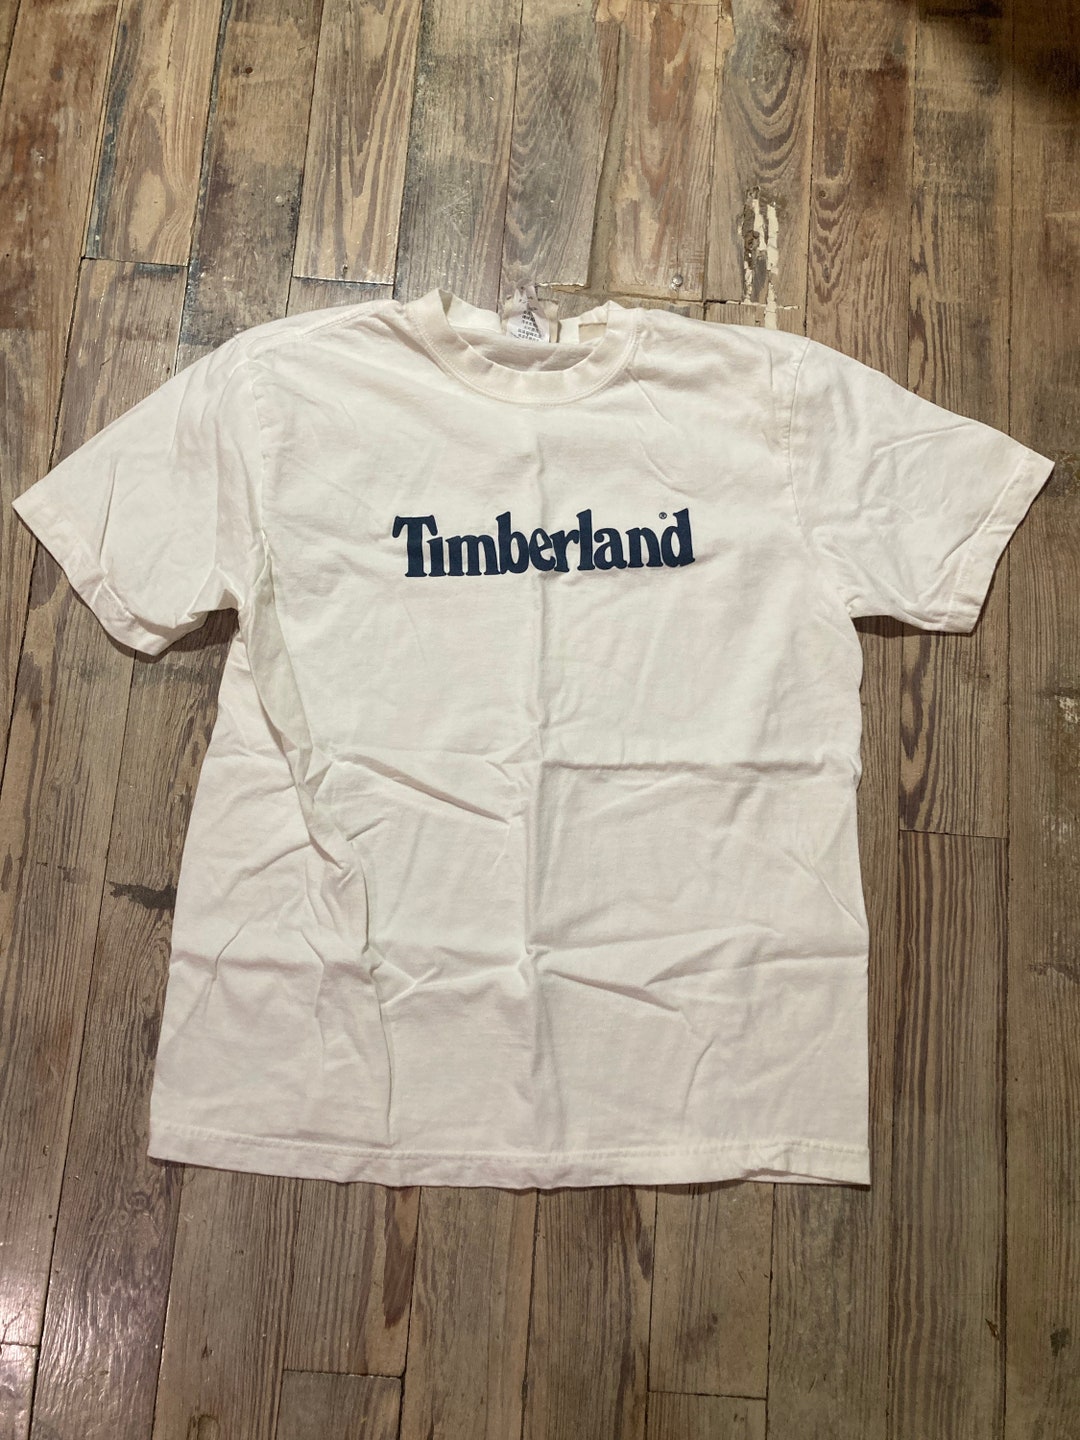 Timberland Tee 1990s - Etsy